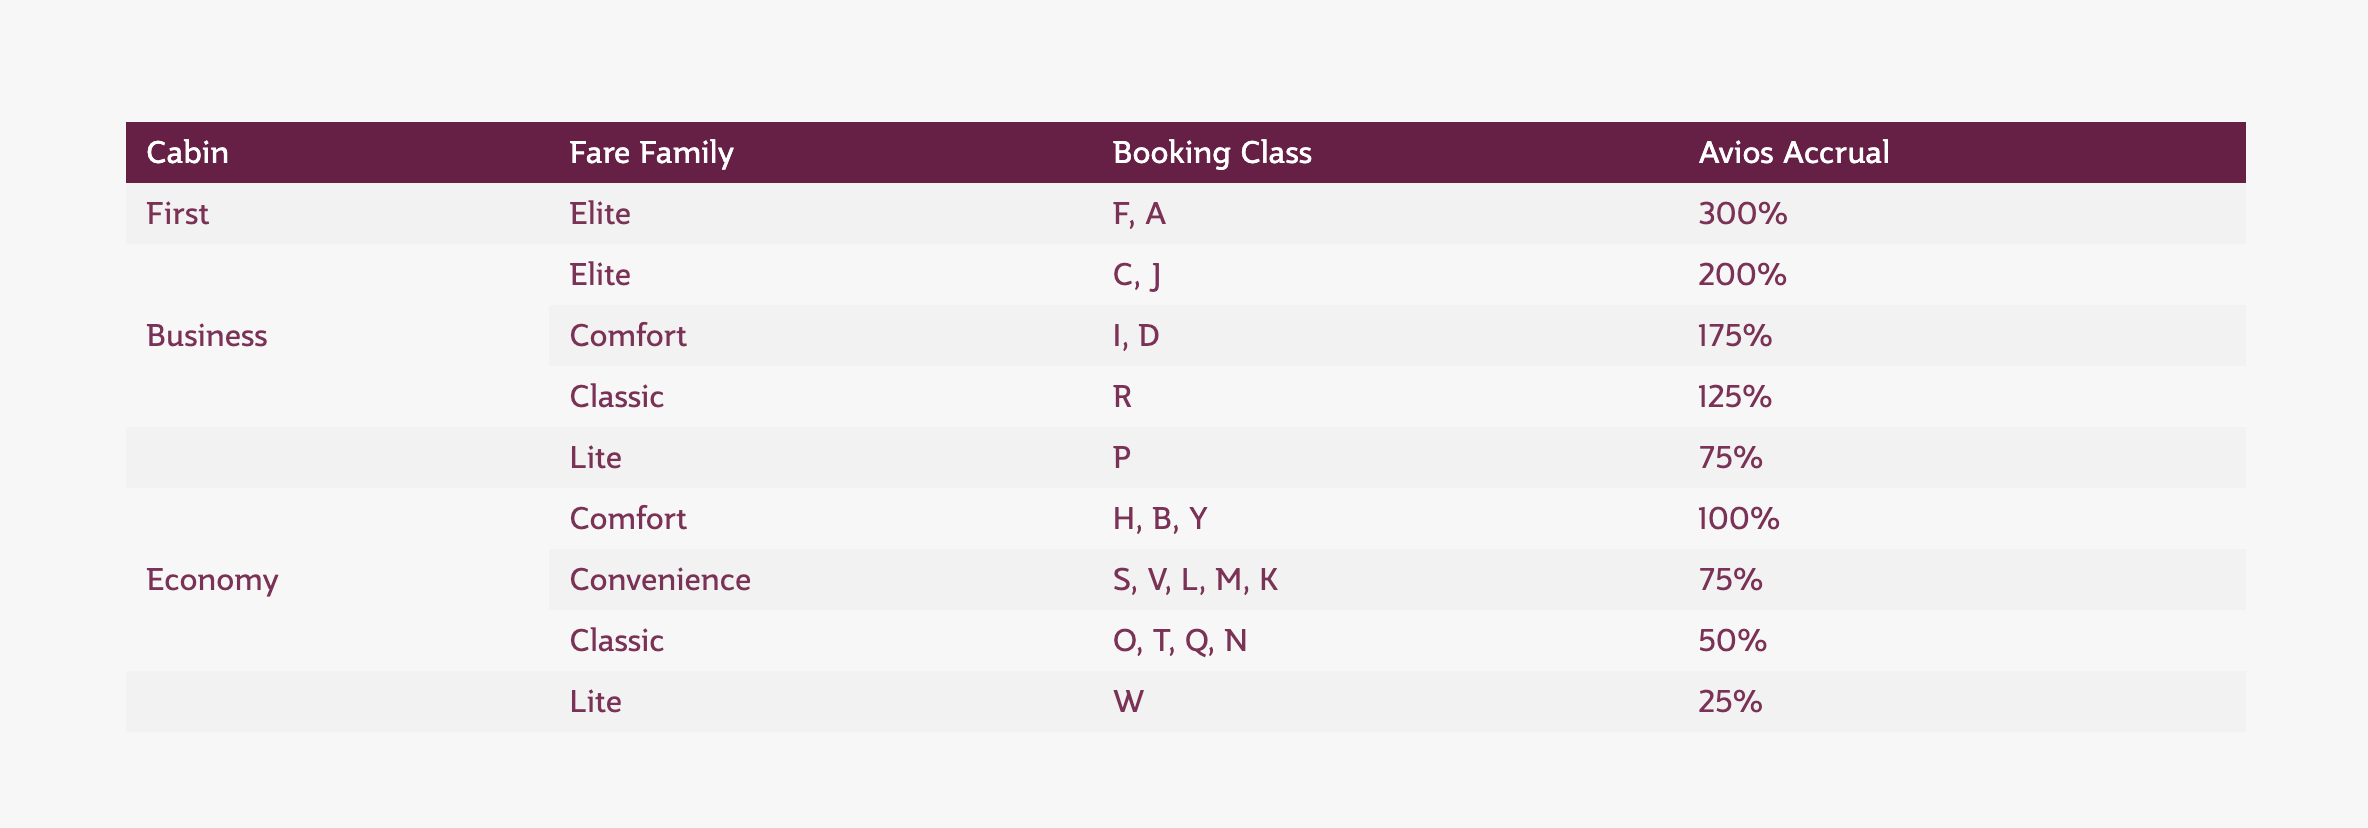 Qatar Airways Privilege Club accrual chart for Qatar-operated flights